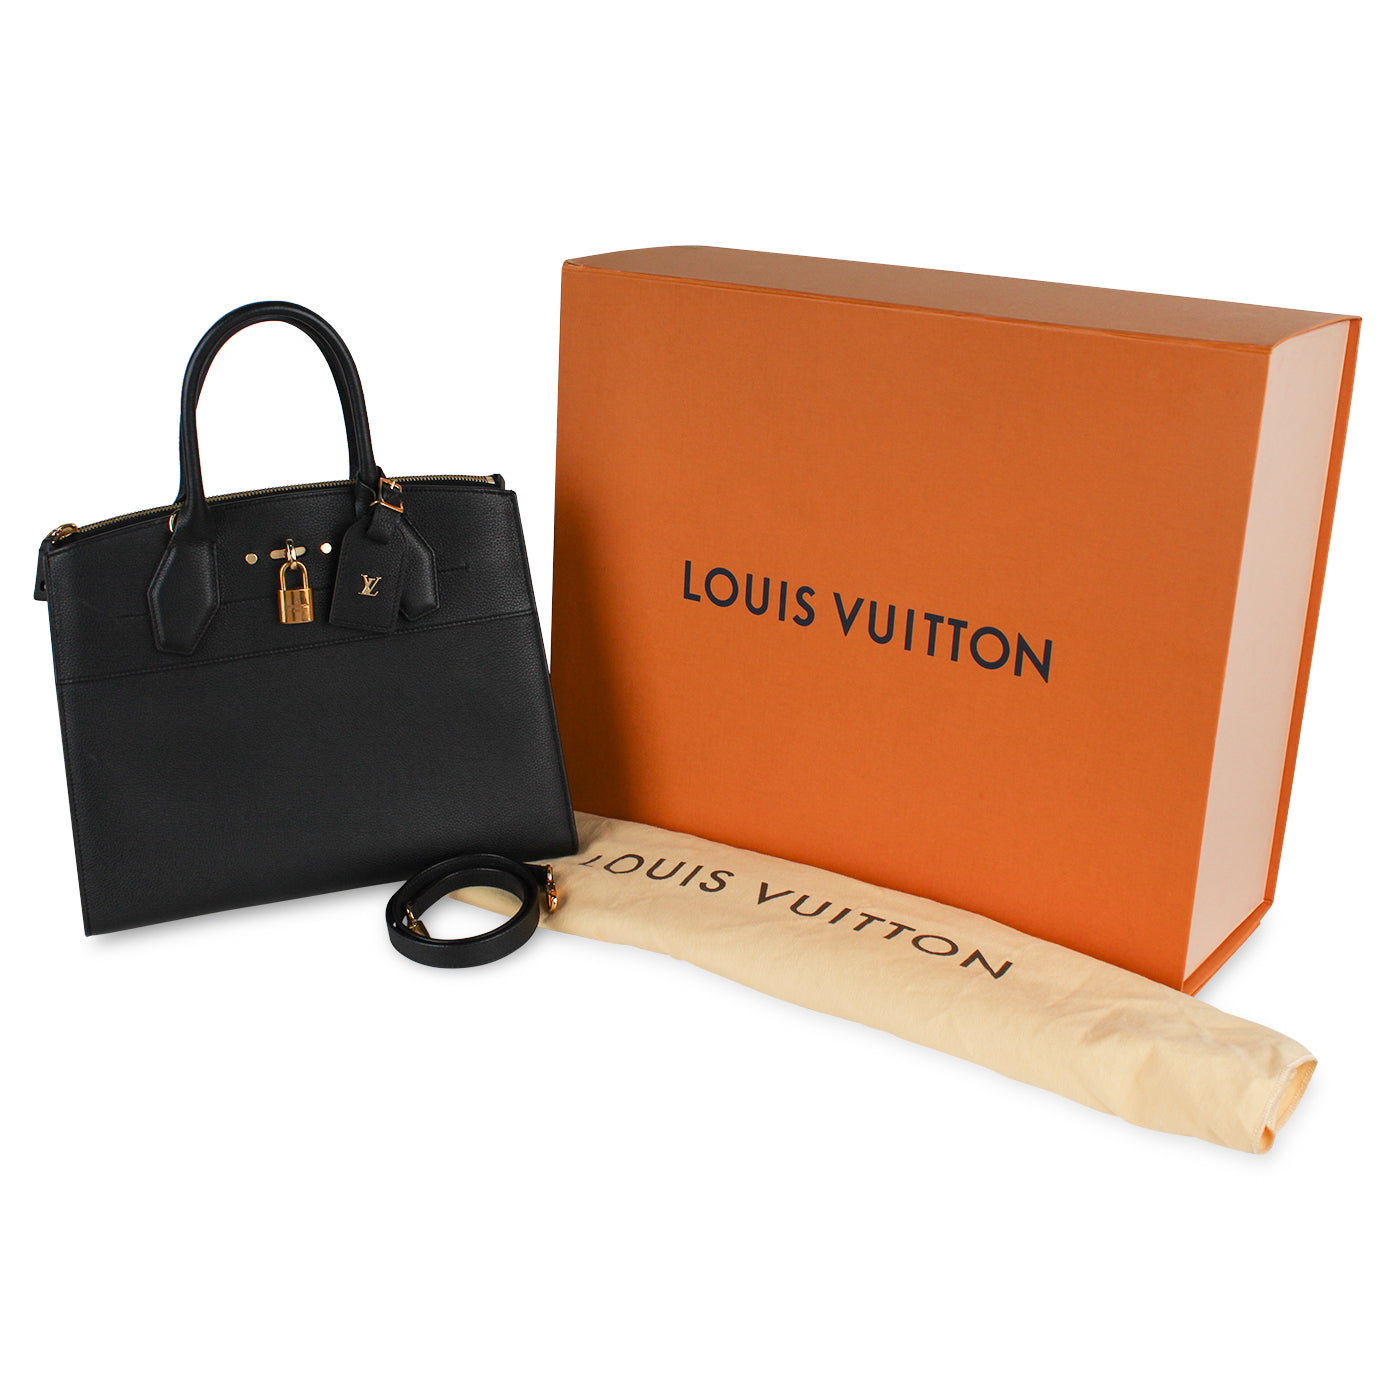 Louis Vuitton - City Steamer MM - Black - Grained leather - Pre